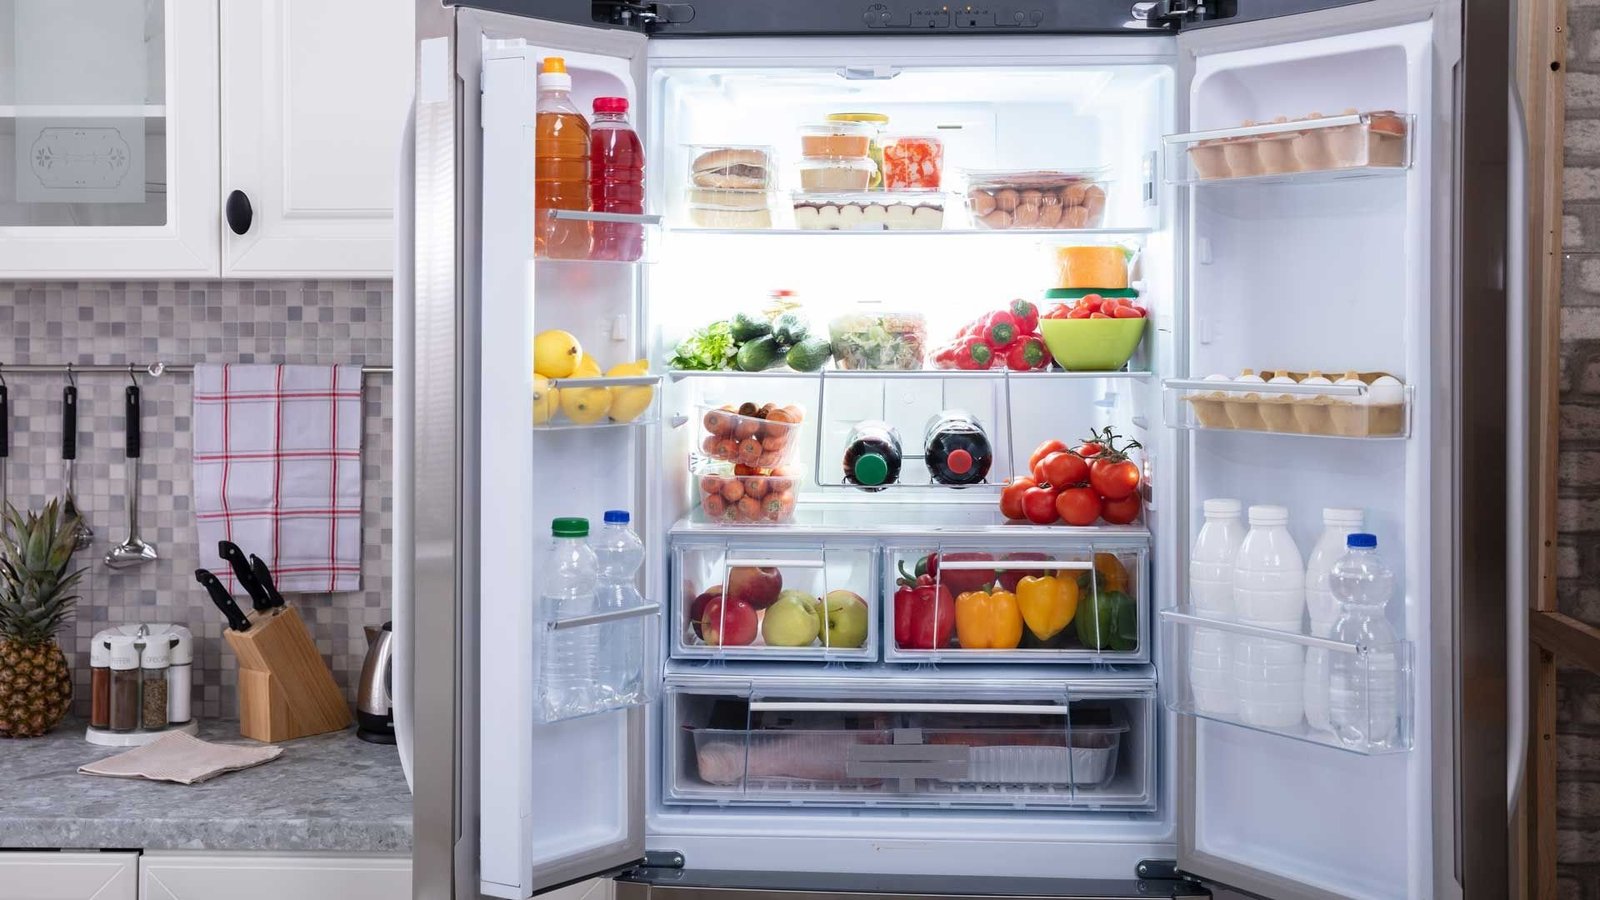 Subzero fridge